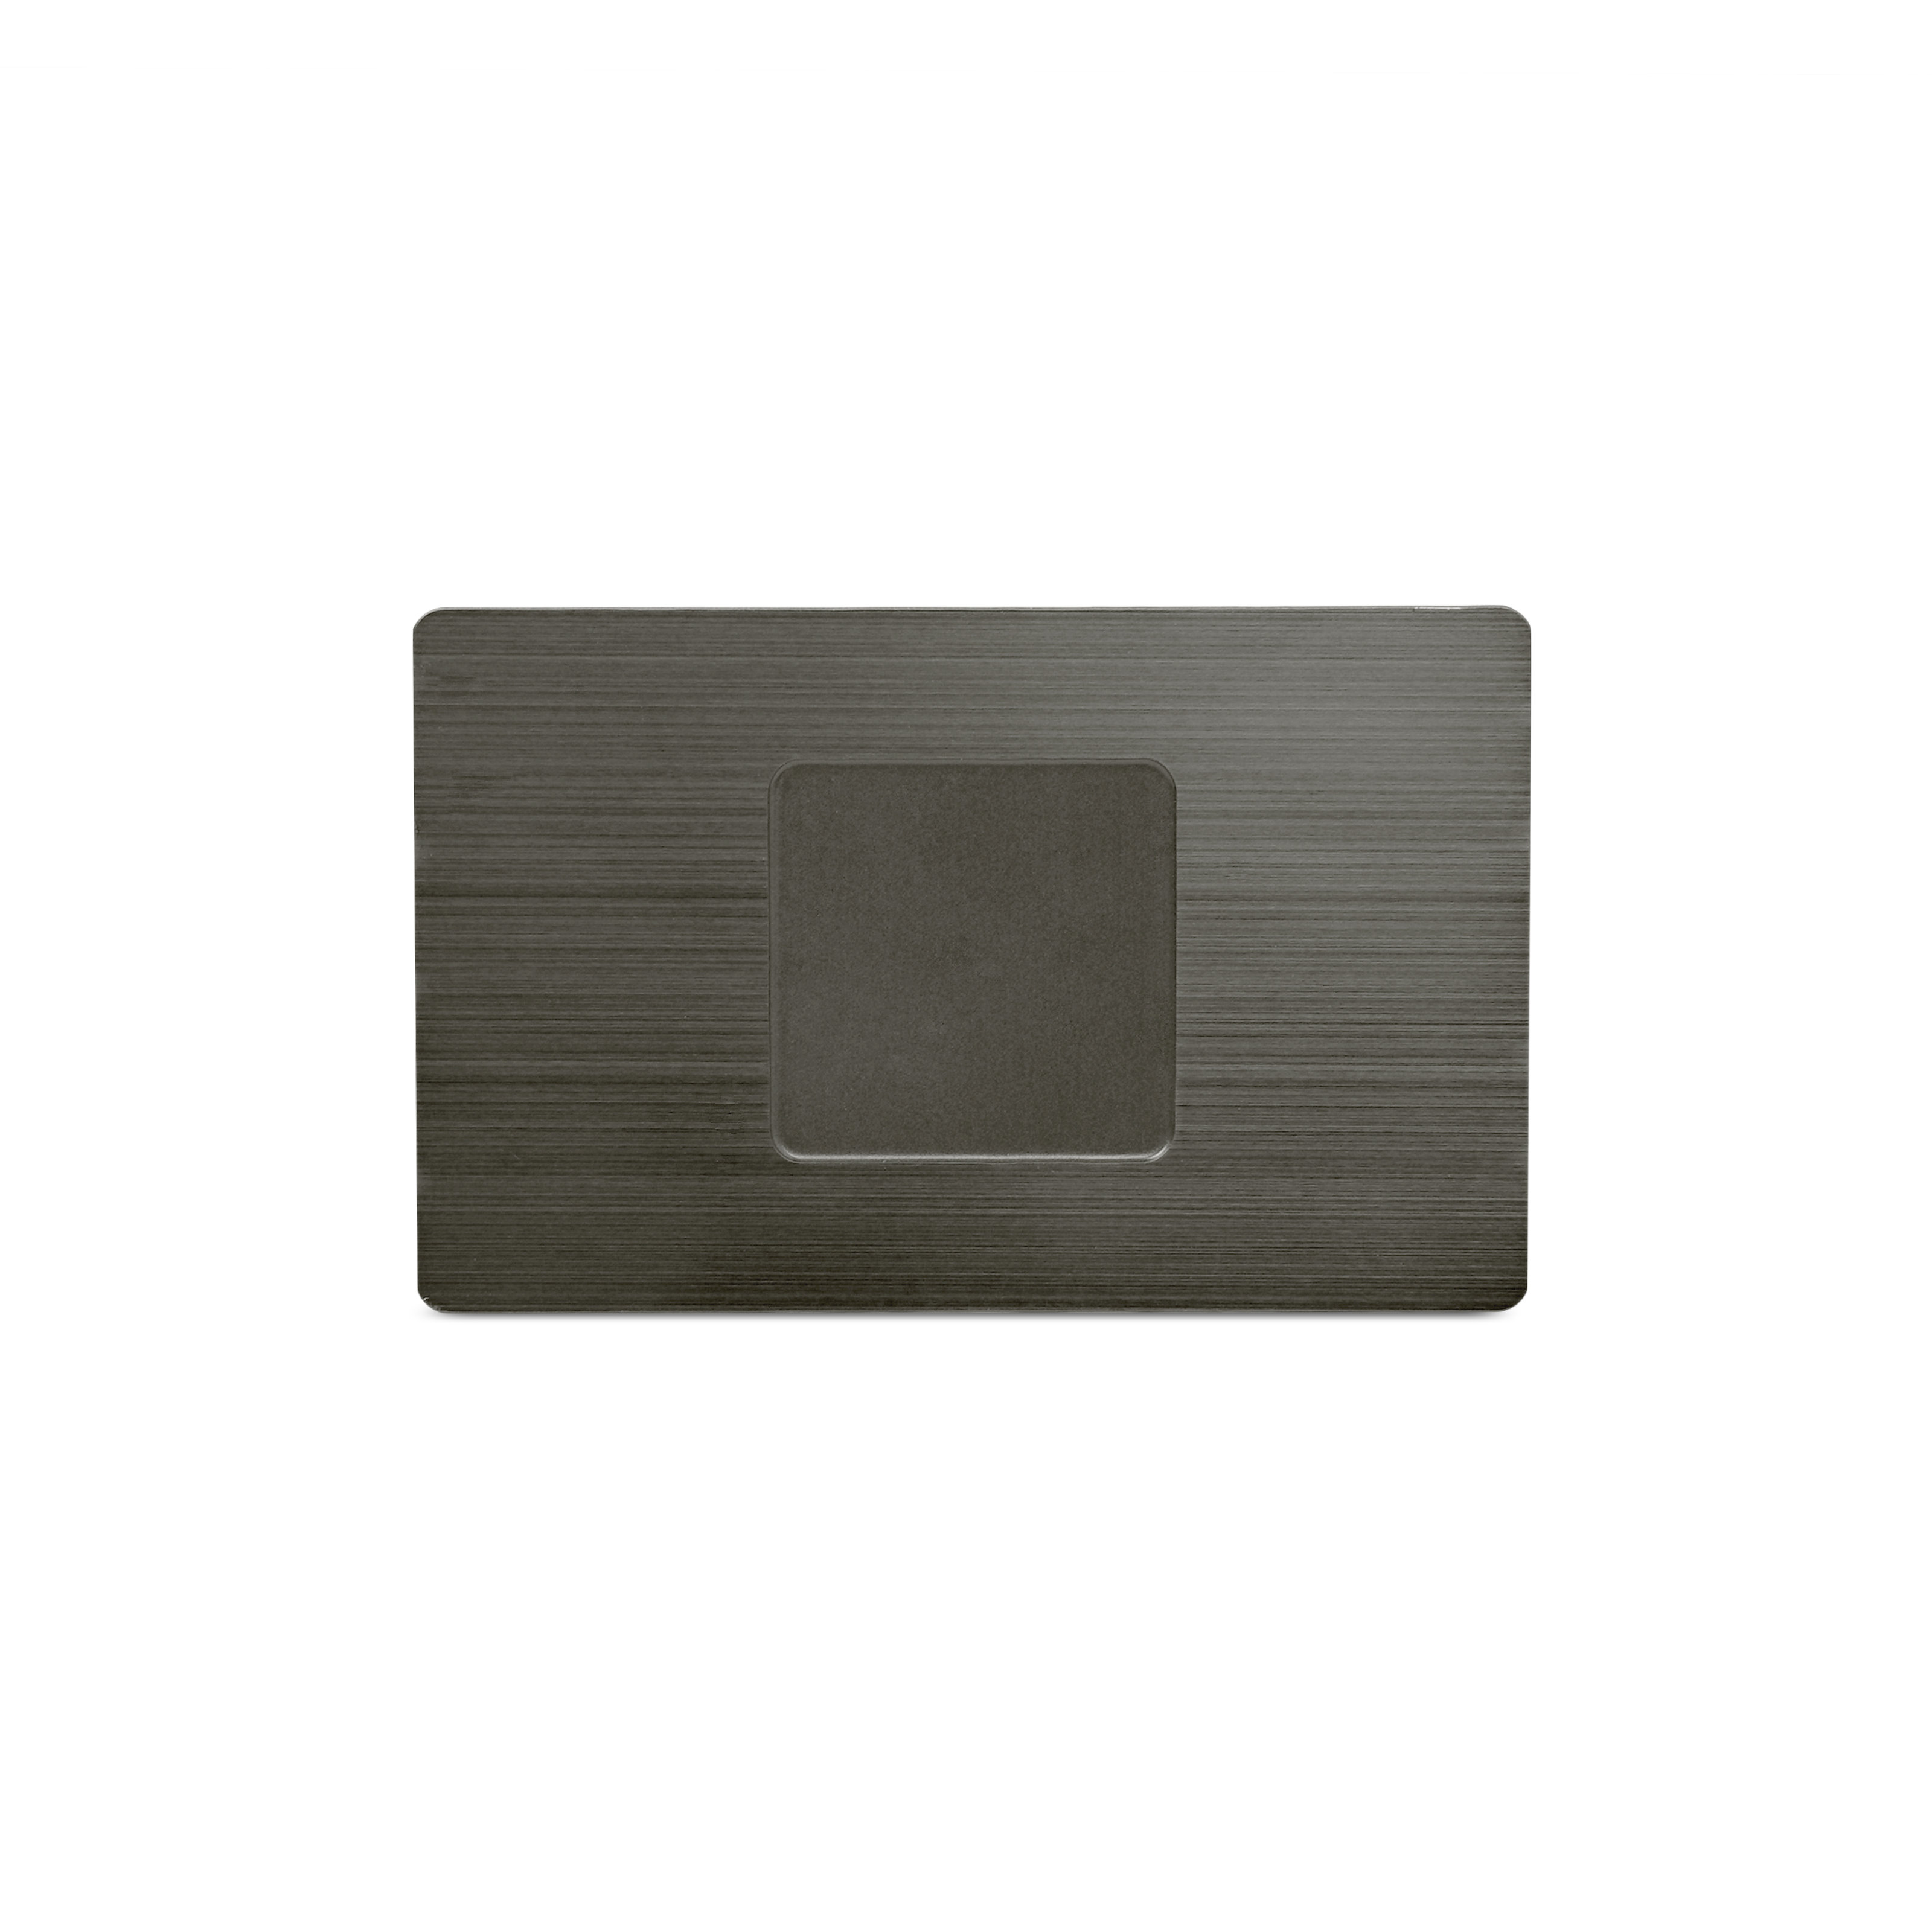 NFC-vCard - Digitale Visitenkarte - inkl. NFC-vCard Zugang - Metall - 85,6 x 54 mm - anthrazit mit Gravur